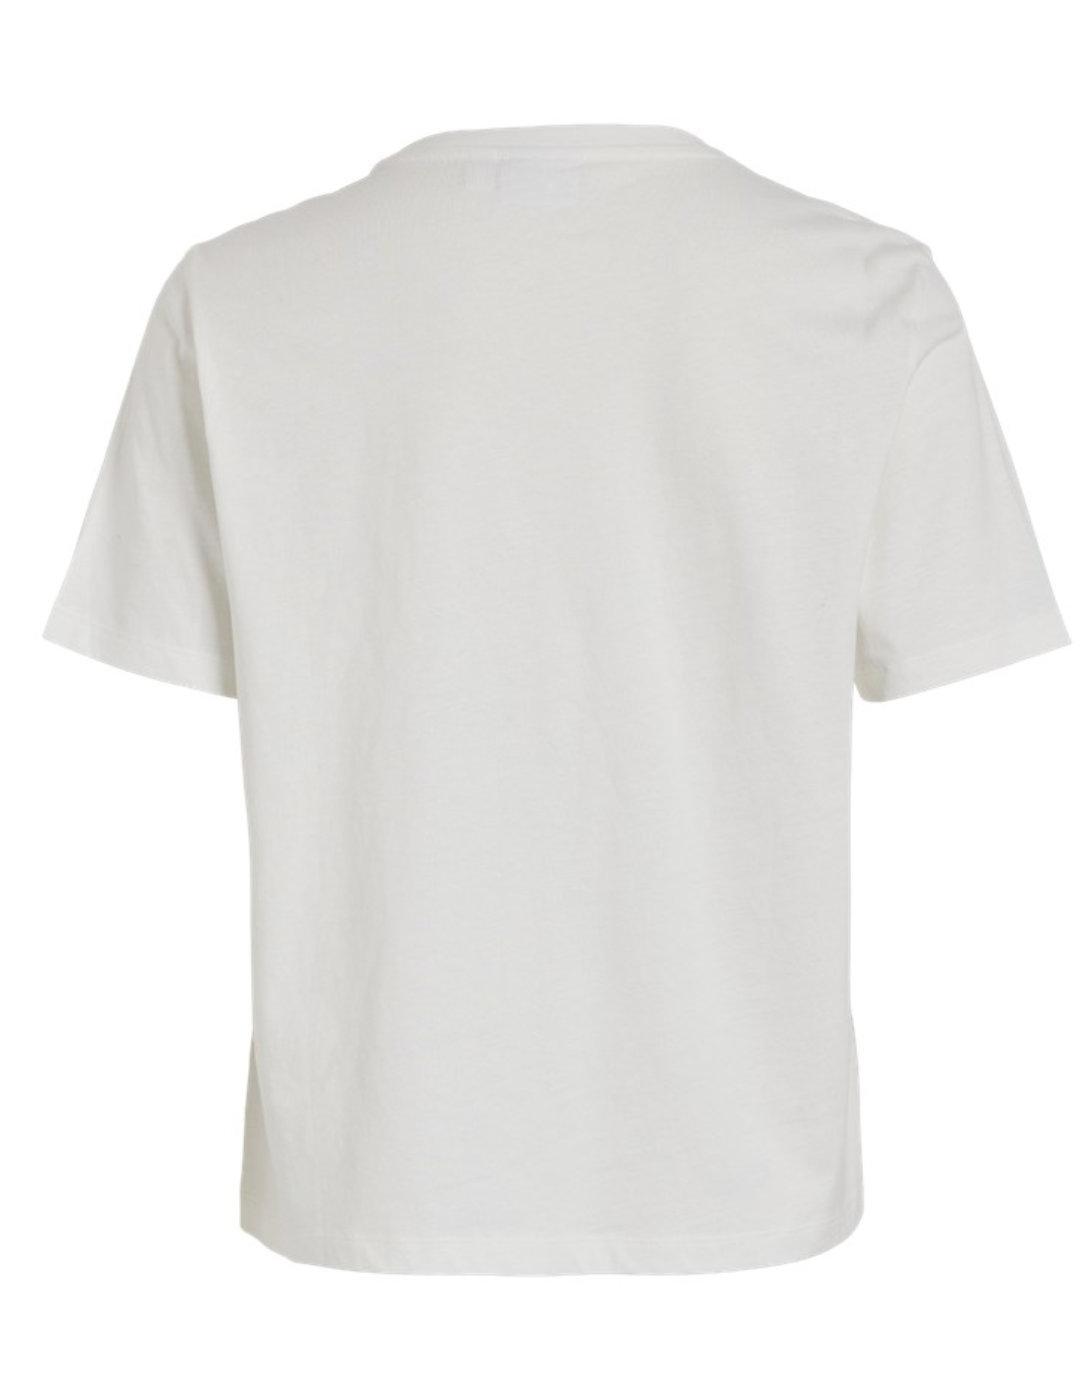 Camiseta Vila Sybil blanca Hope manga corta para mujer